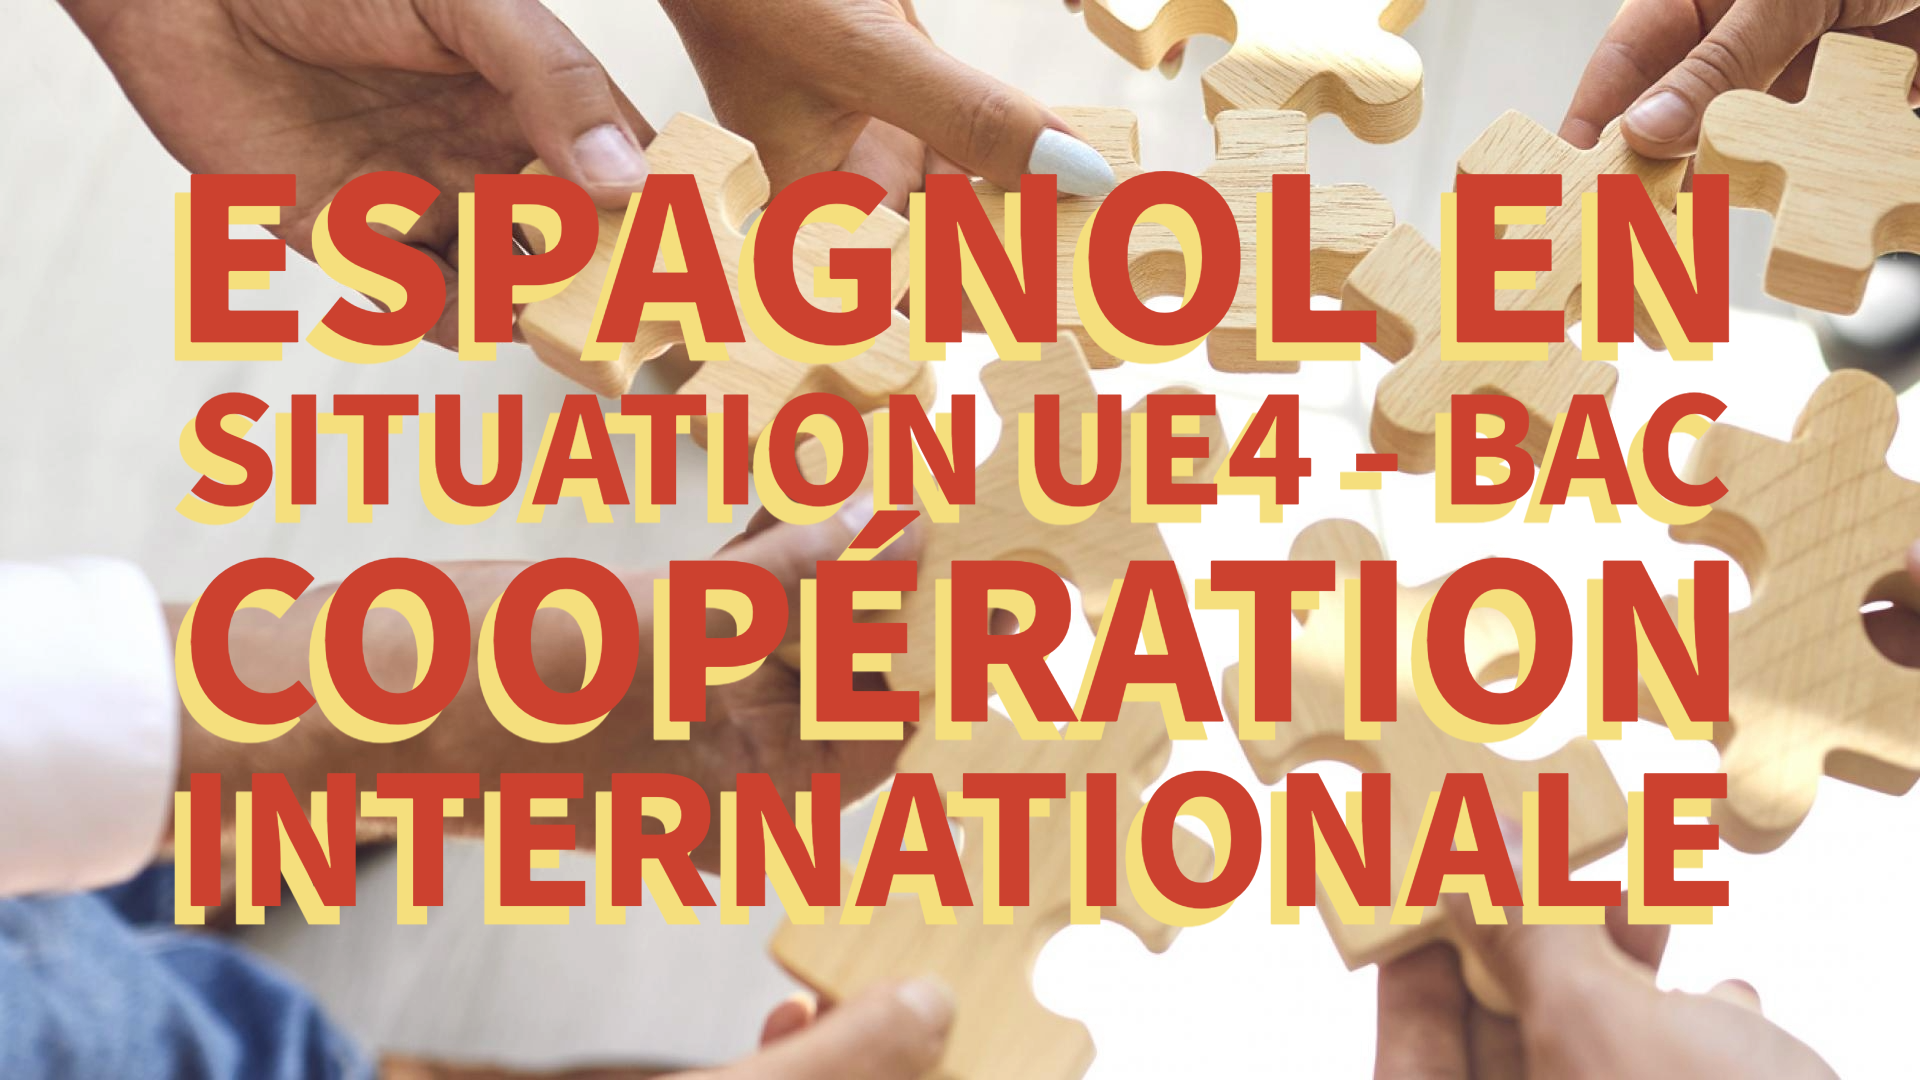 Espagnol en situation UE4 - Bac coopération internationale 